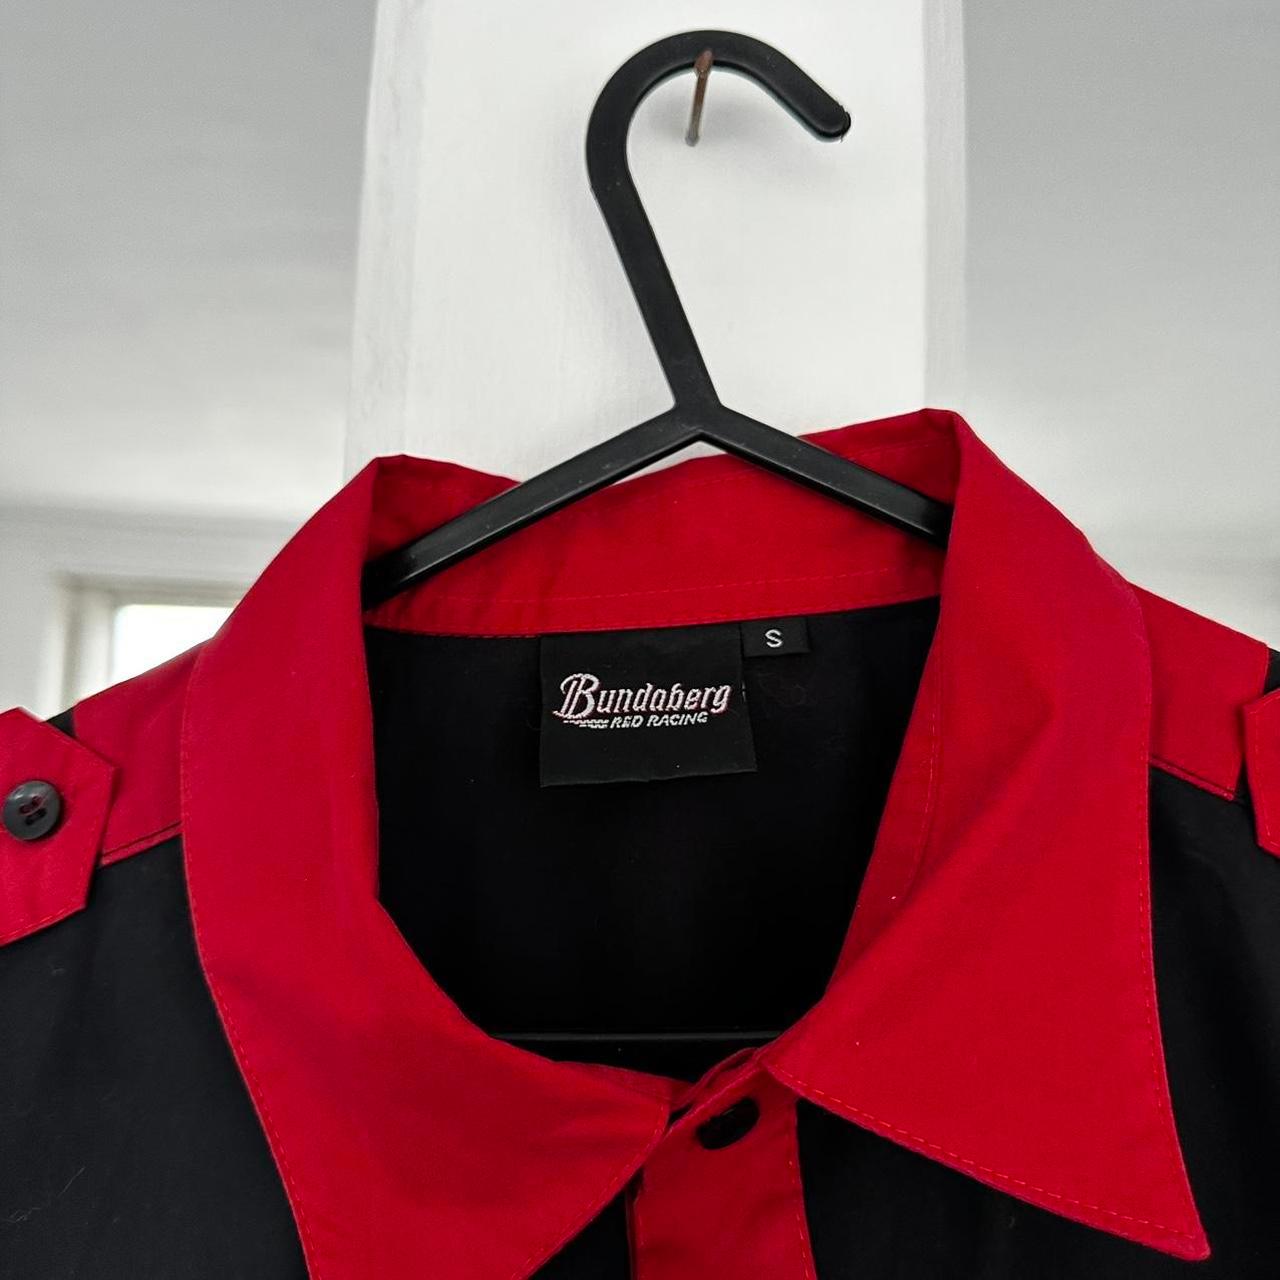 Red and Black Bundaberg Racing shirt - Known Source